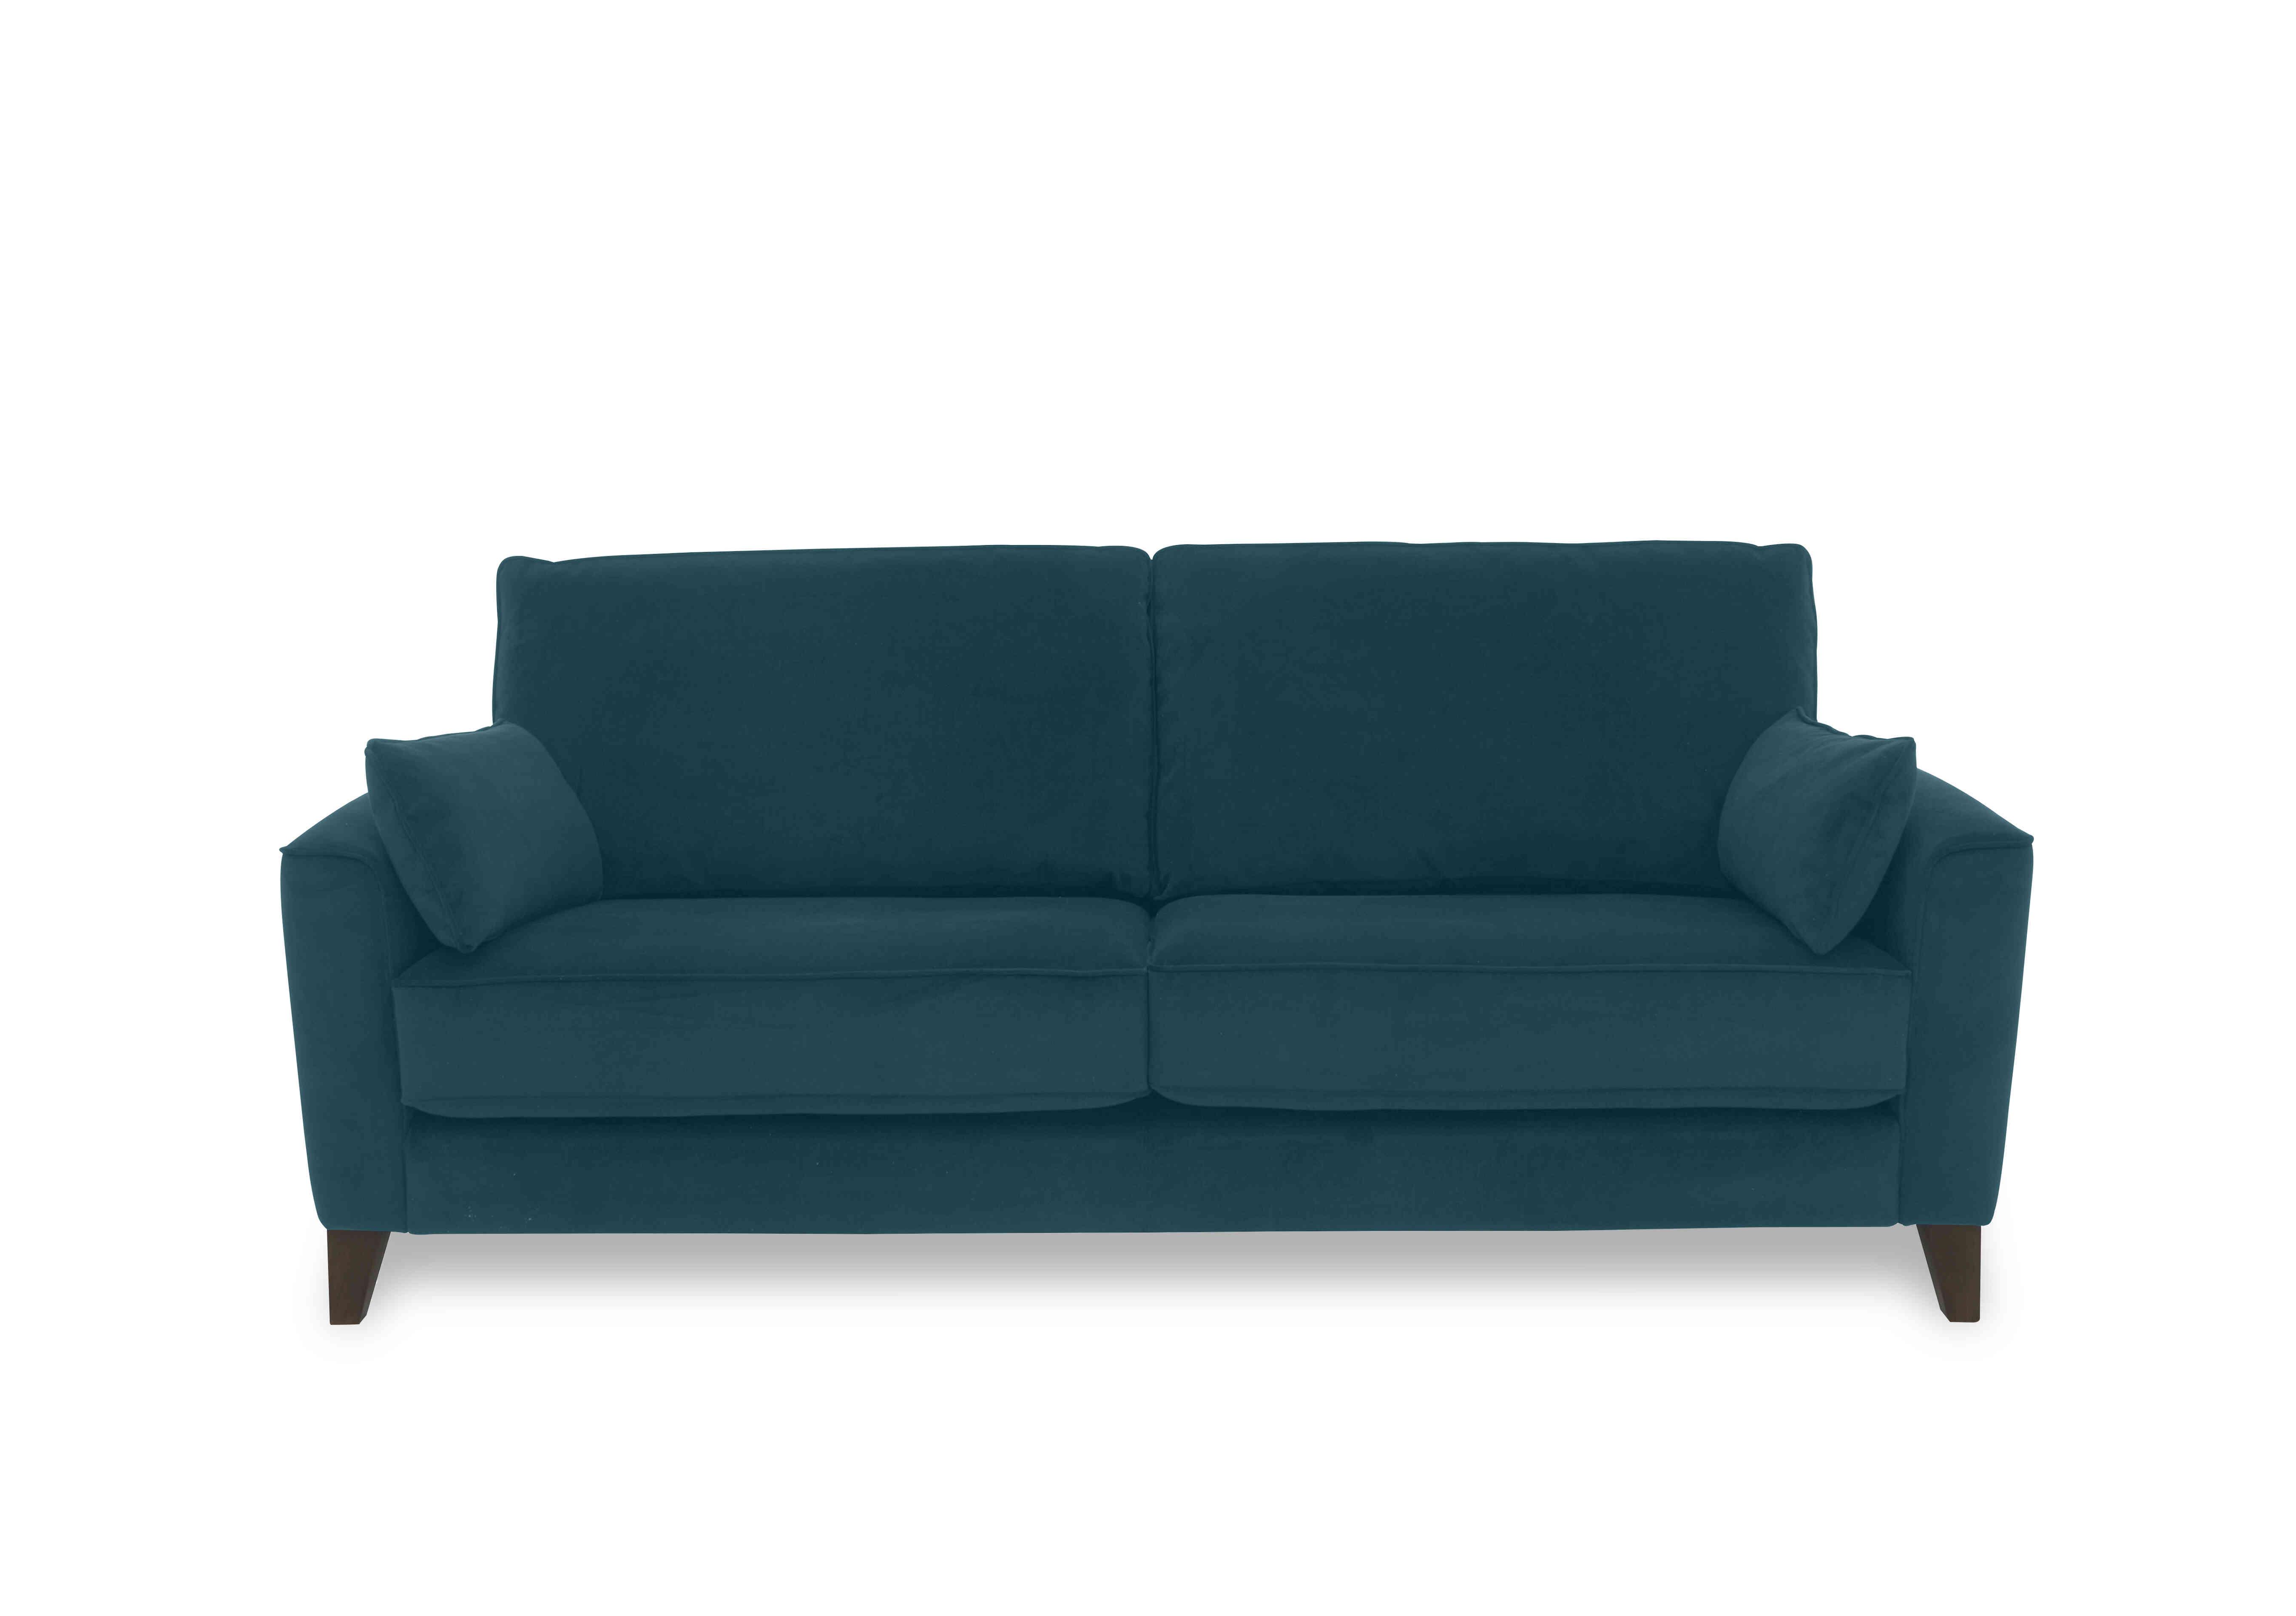 Brondby 3 Seater Fabric Sofa in Fab-Meg-R36 Lake Green on Furniture Village